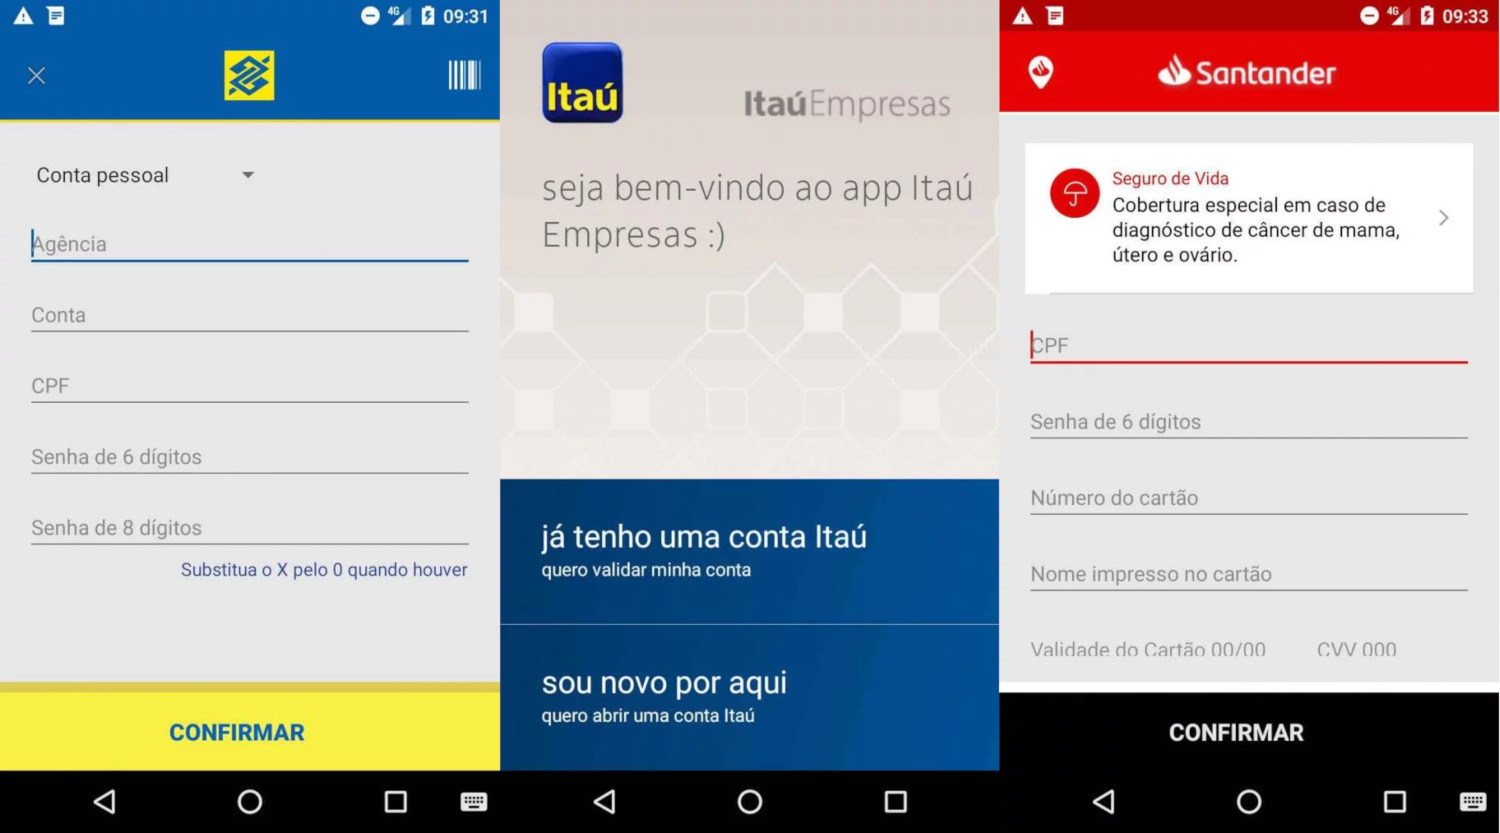 WannaHydra / apps Android Banco do Brasil, Itaú e Santander / malware